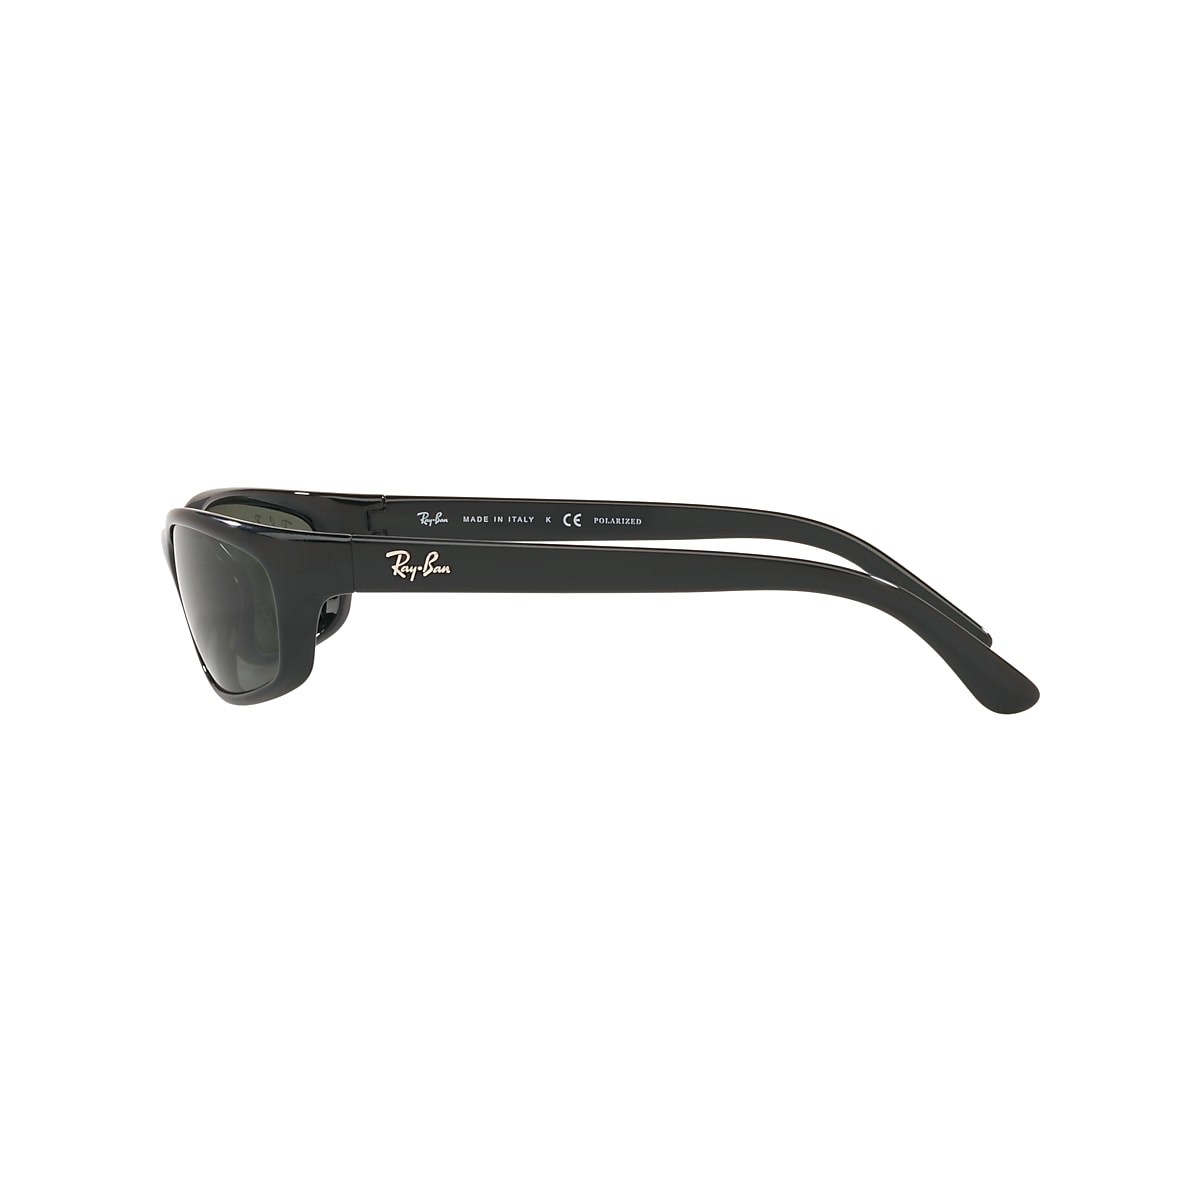 Thorns lodret Sporvogn Ray-Ban RB4115 57 Green & Black Polarized Sunglasses | Sunglass Hut USA